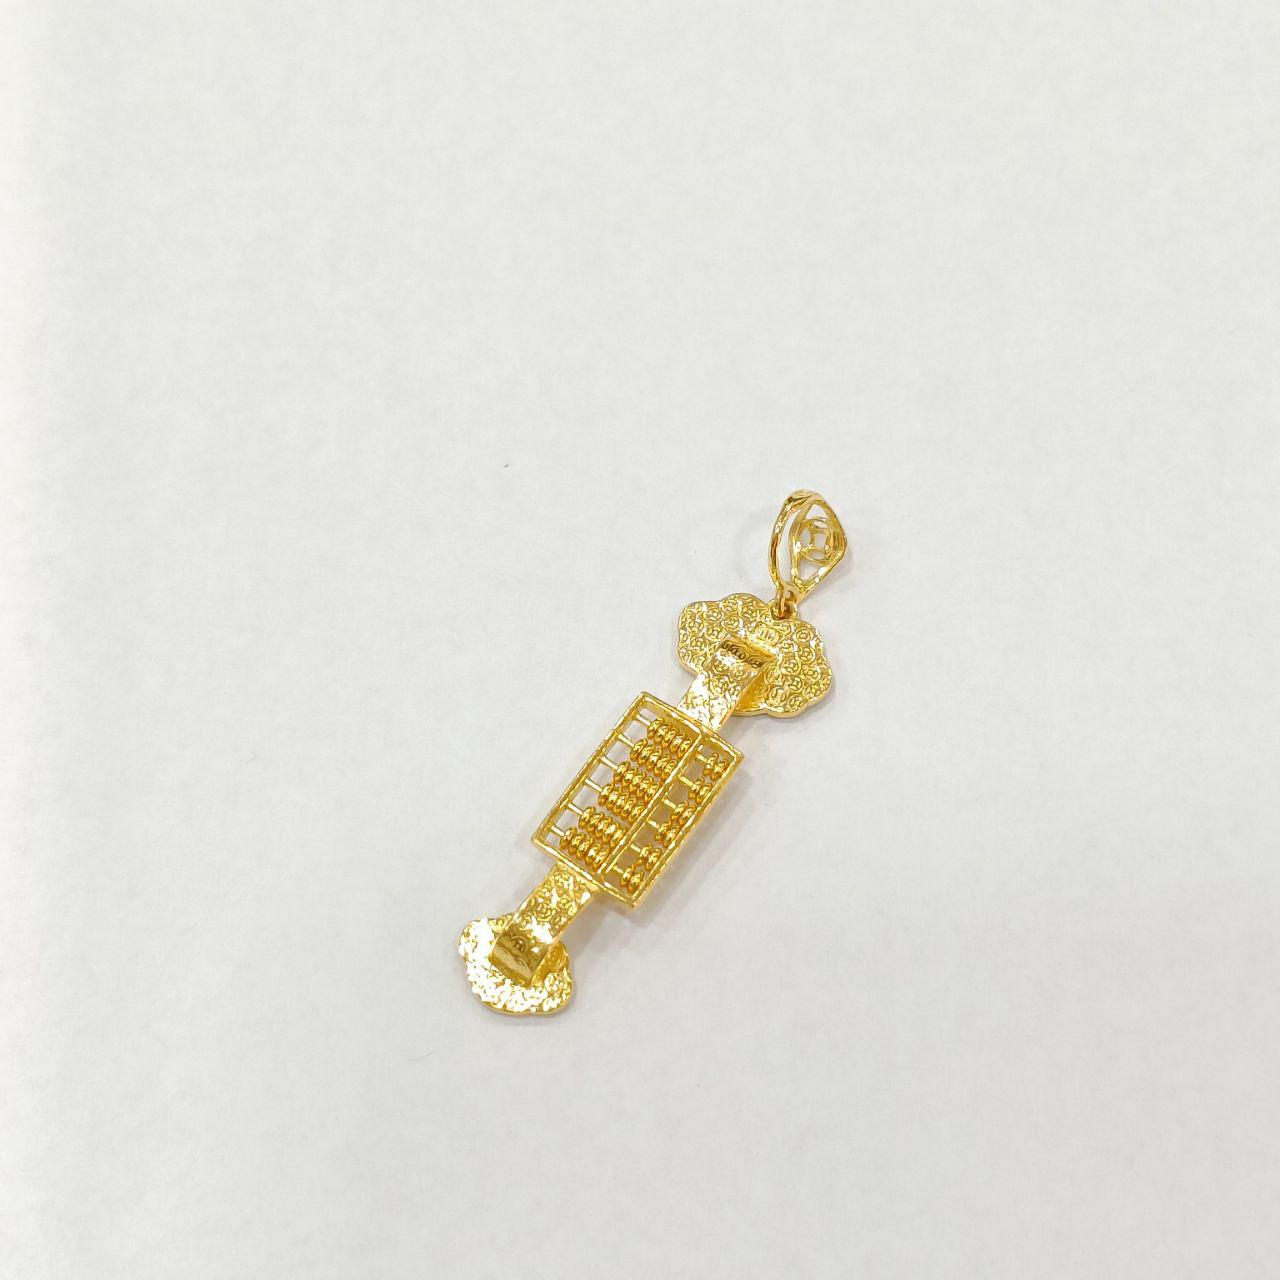 22k / 916 Gold Ru yi Lucky abacus pendant-916 gold-Best Gold Shop